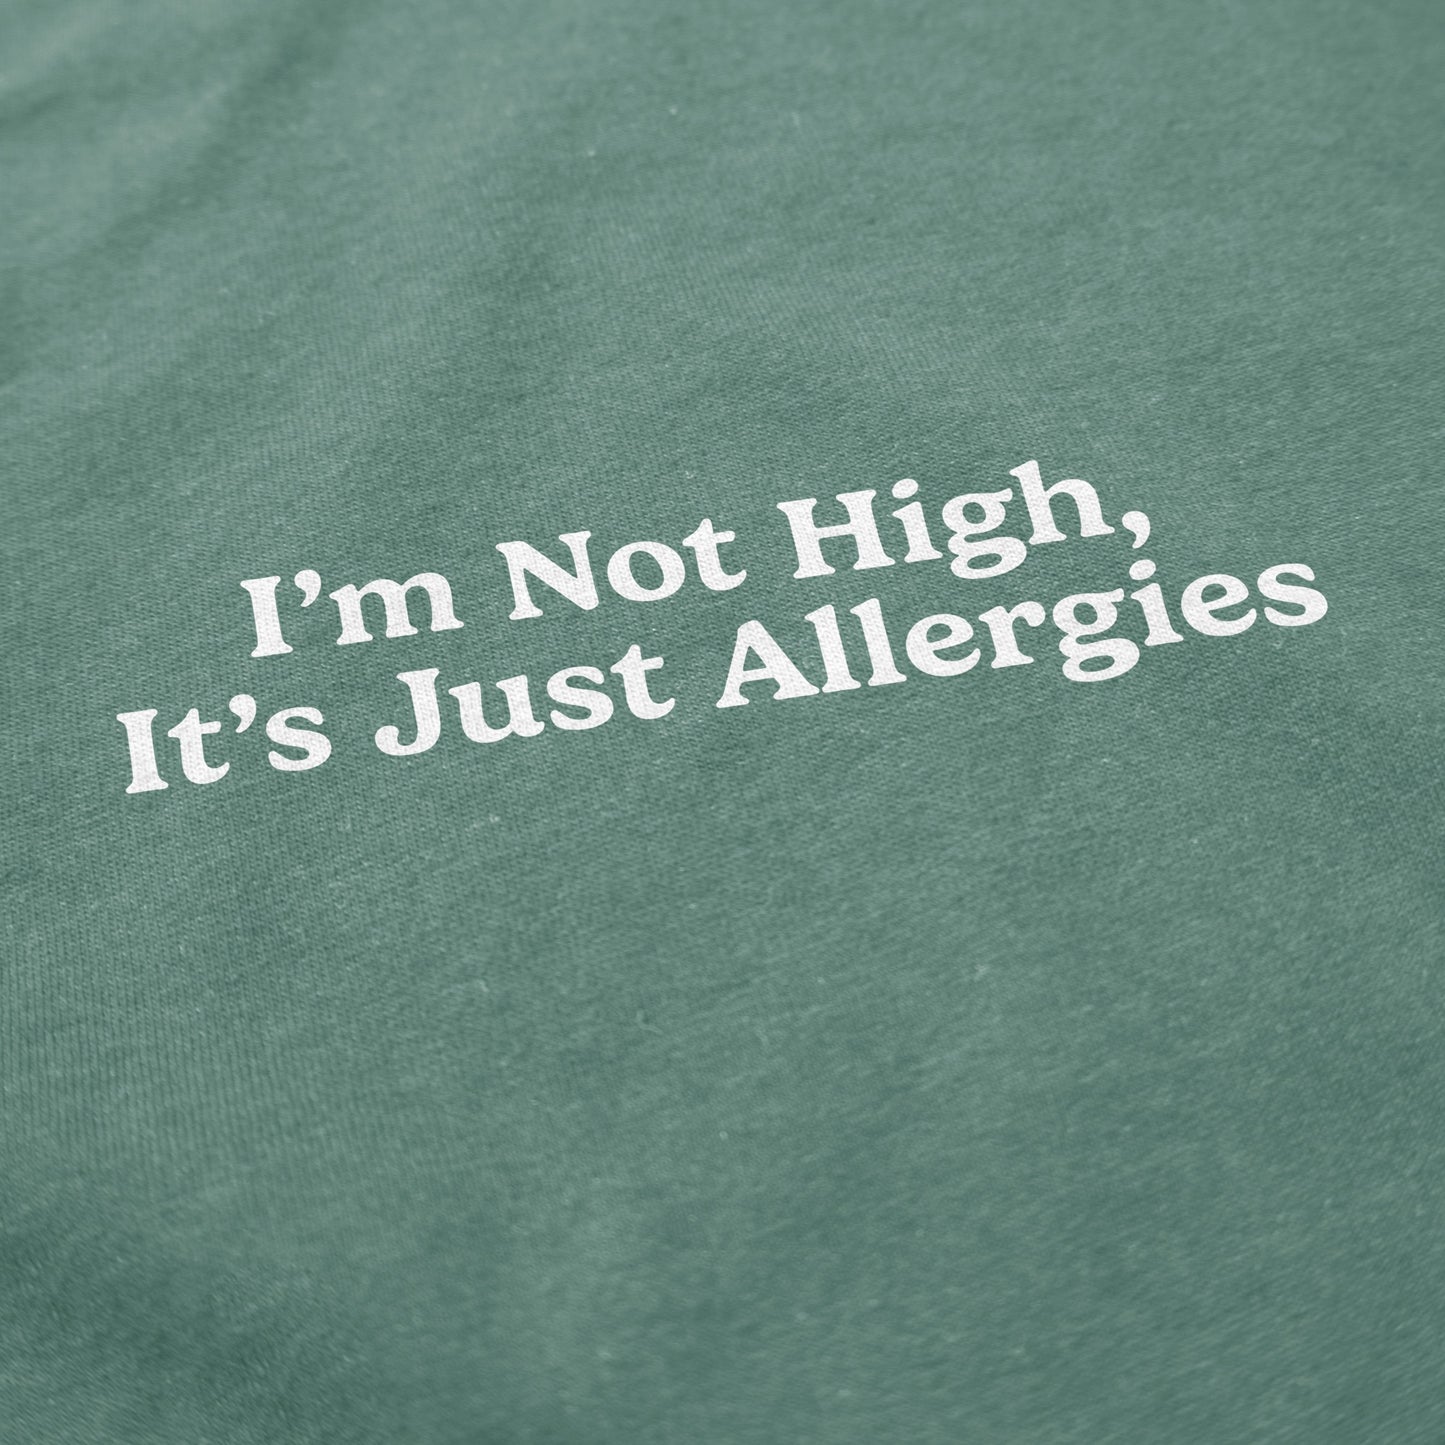 It's Just Allergies Tee